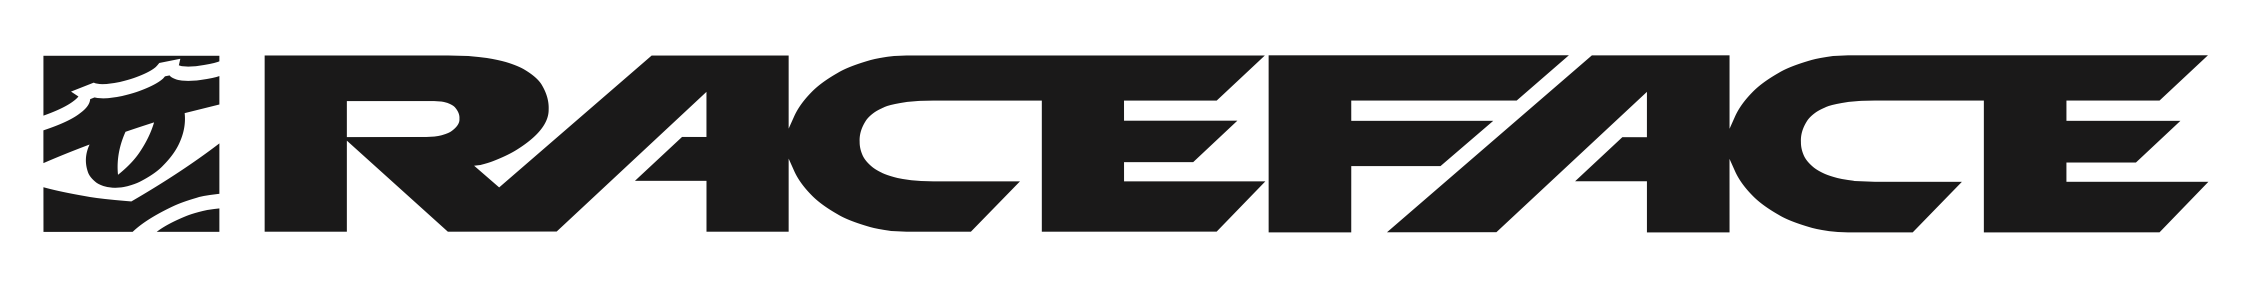 Raceface logo.png